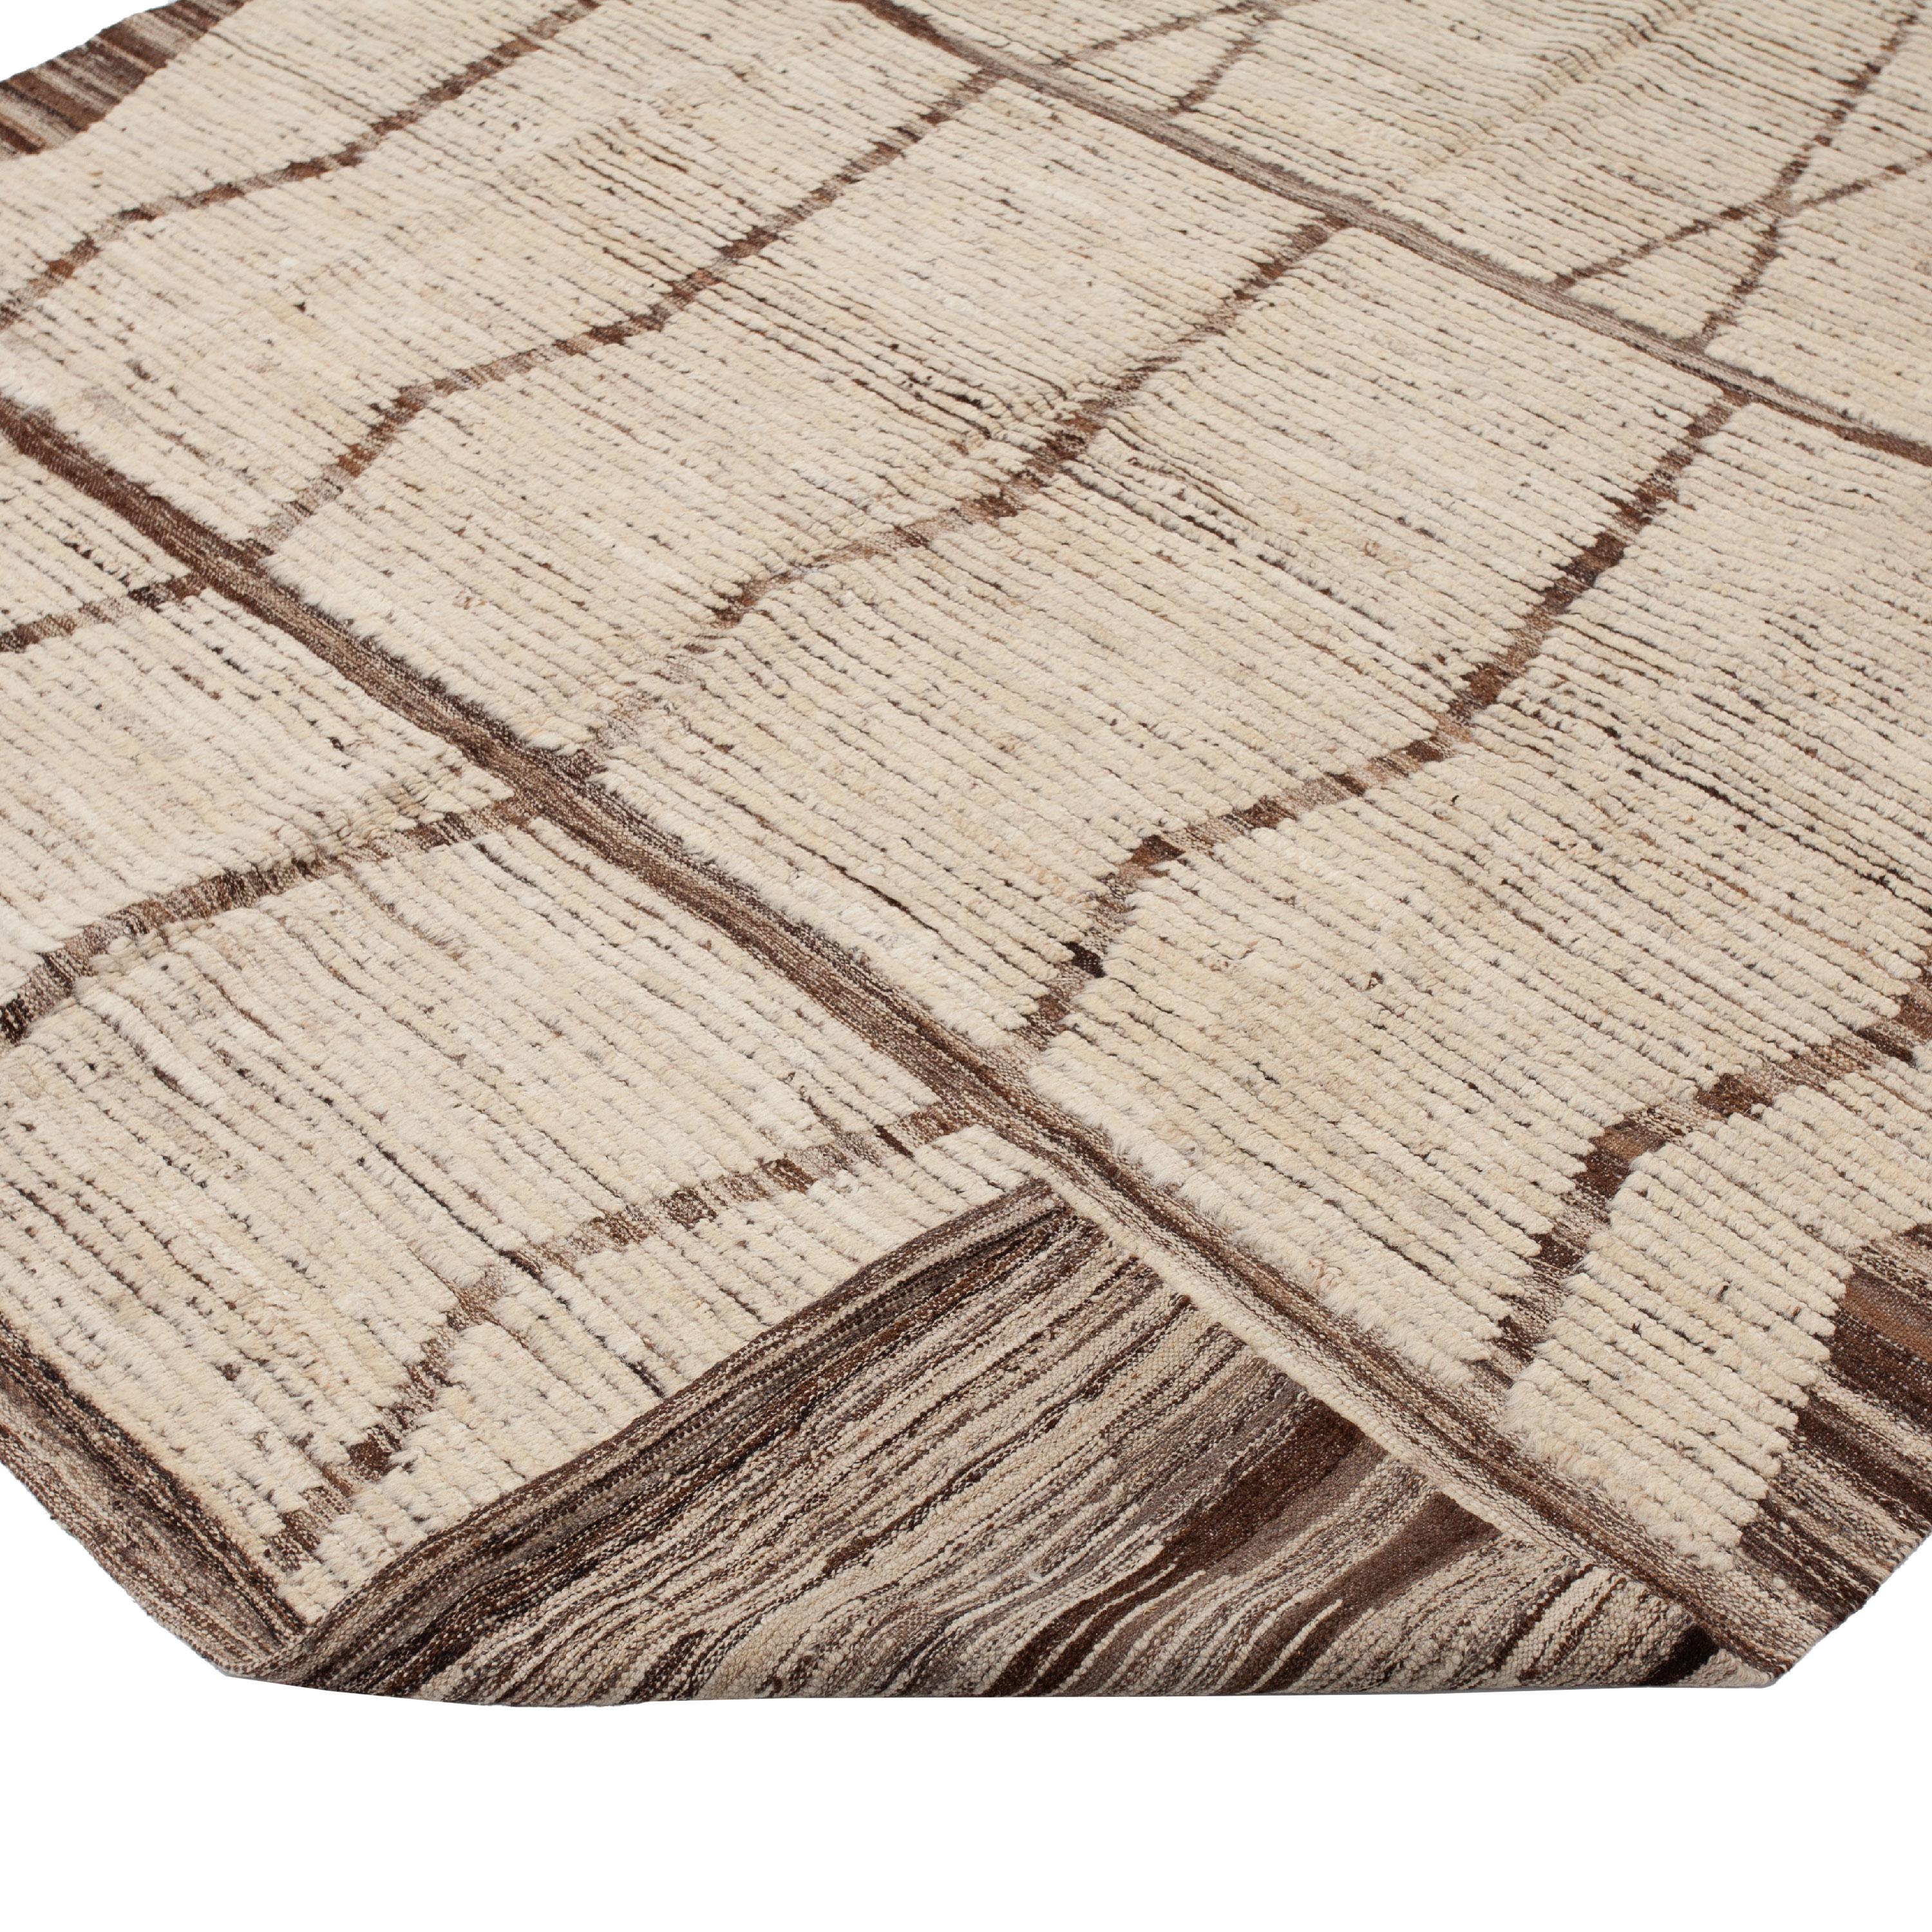 Afghan abc carpet Zameen Cream and Brown Geometric Wool Rug - 6'9